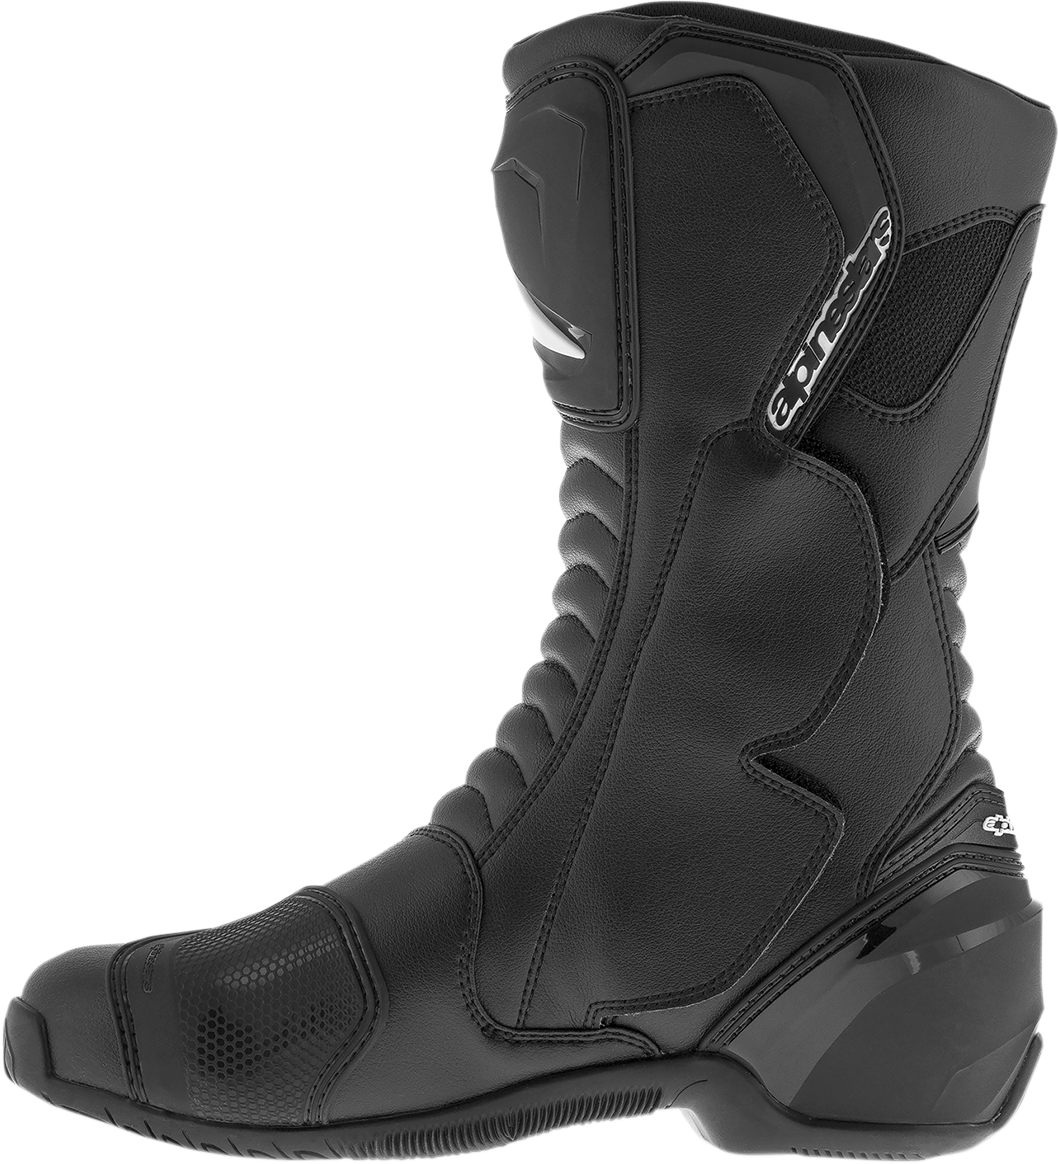 ALPINESTARS SMX-S Boots - Black - US 10.5 / EU 45 224351710045